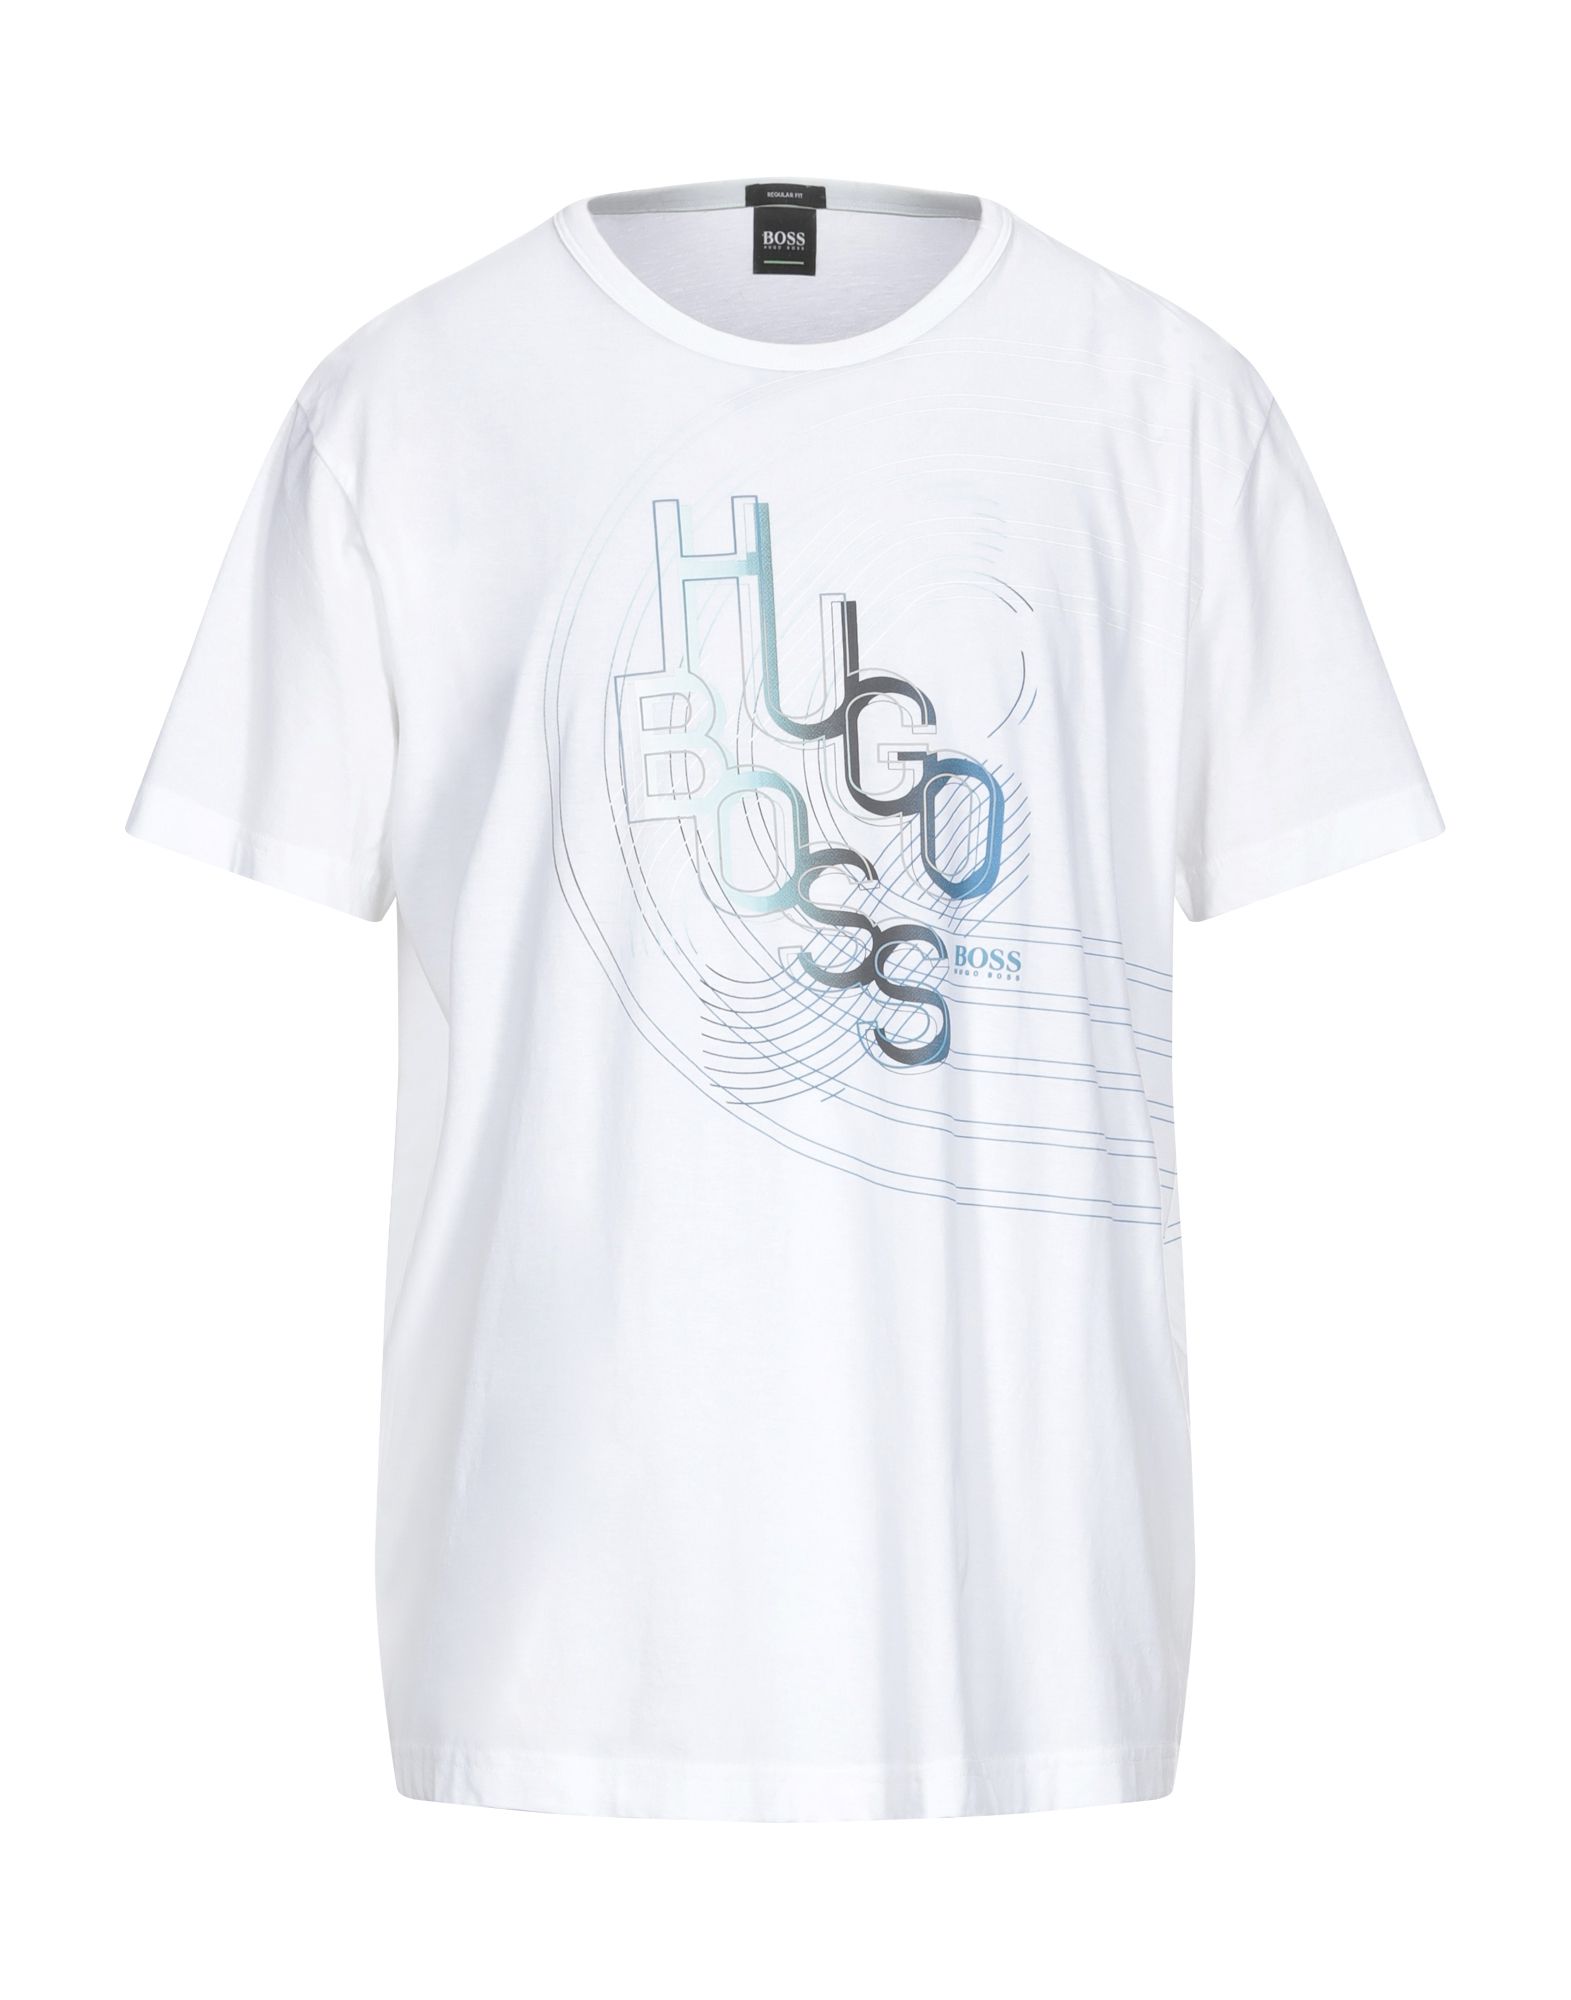 BOSS HUGO BOSS T-shirts - Item 12496651